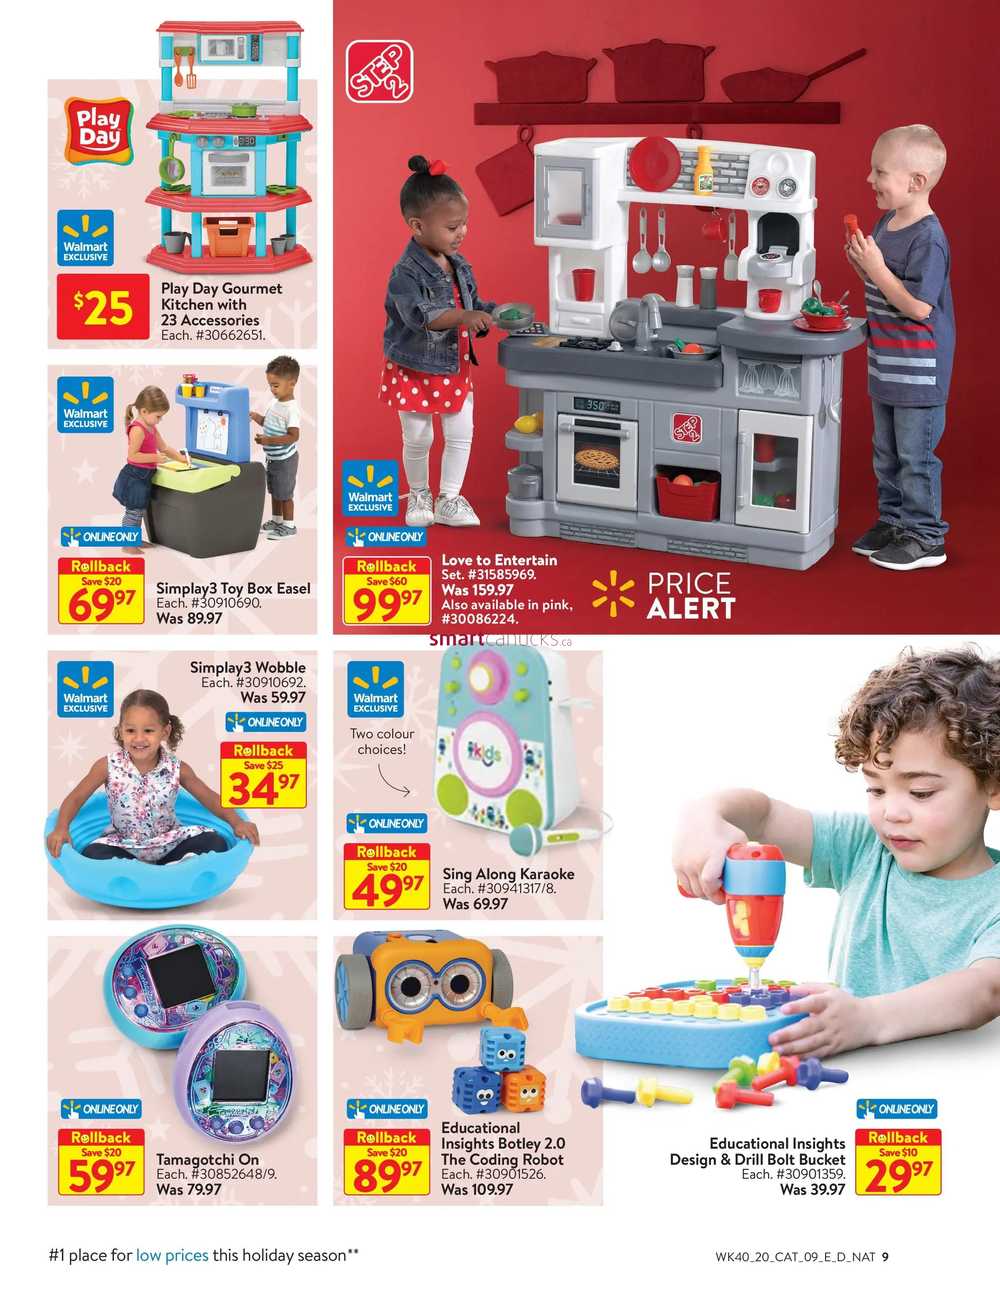 Walmart Toy Shop Flyer October 29 to December 24